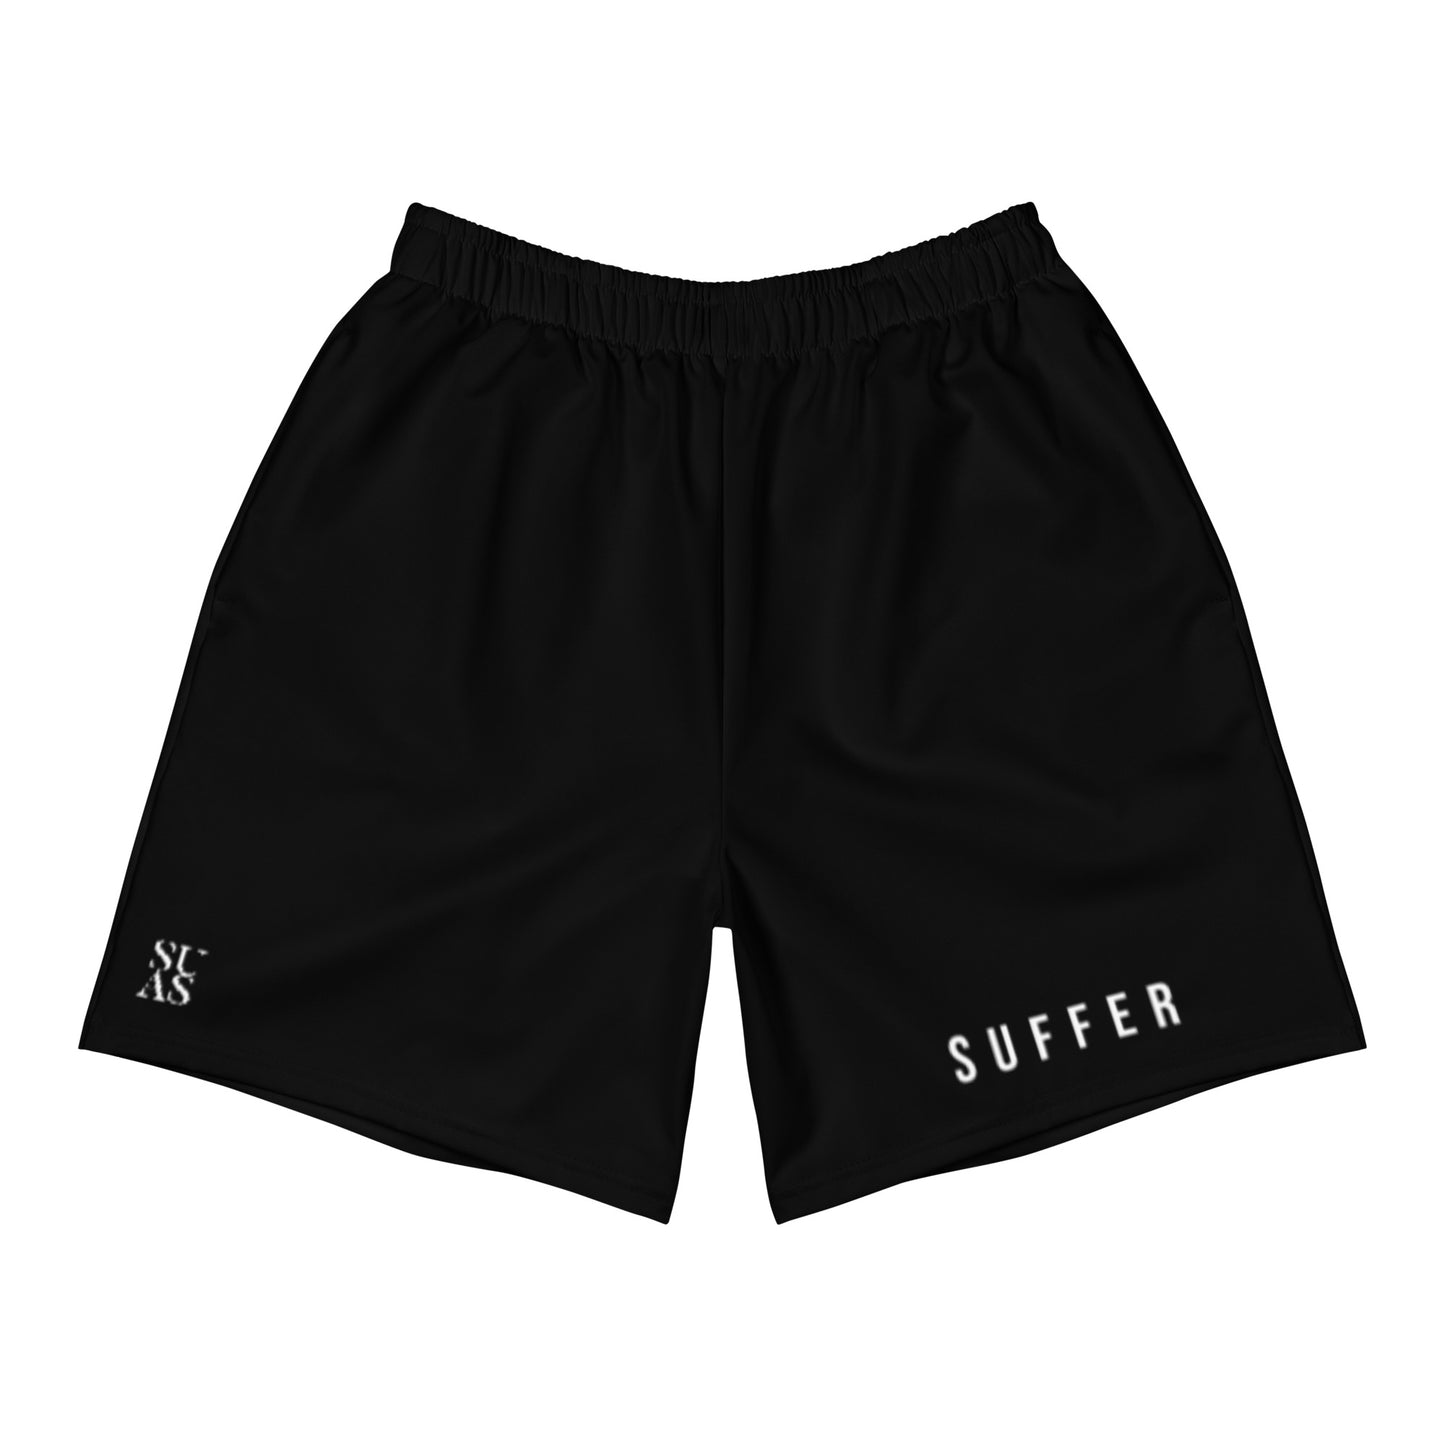 S U F F E R Athletic Shorts